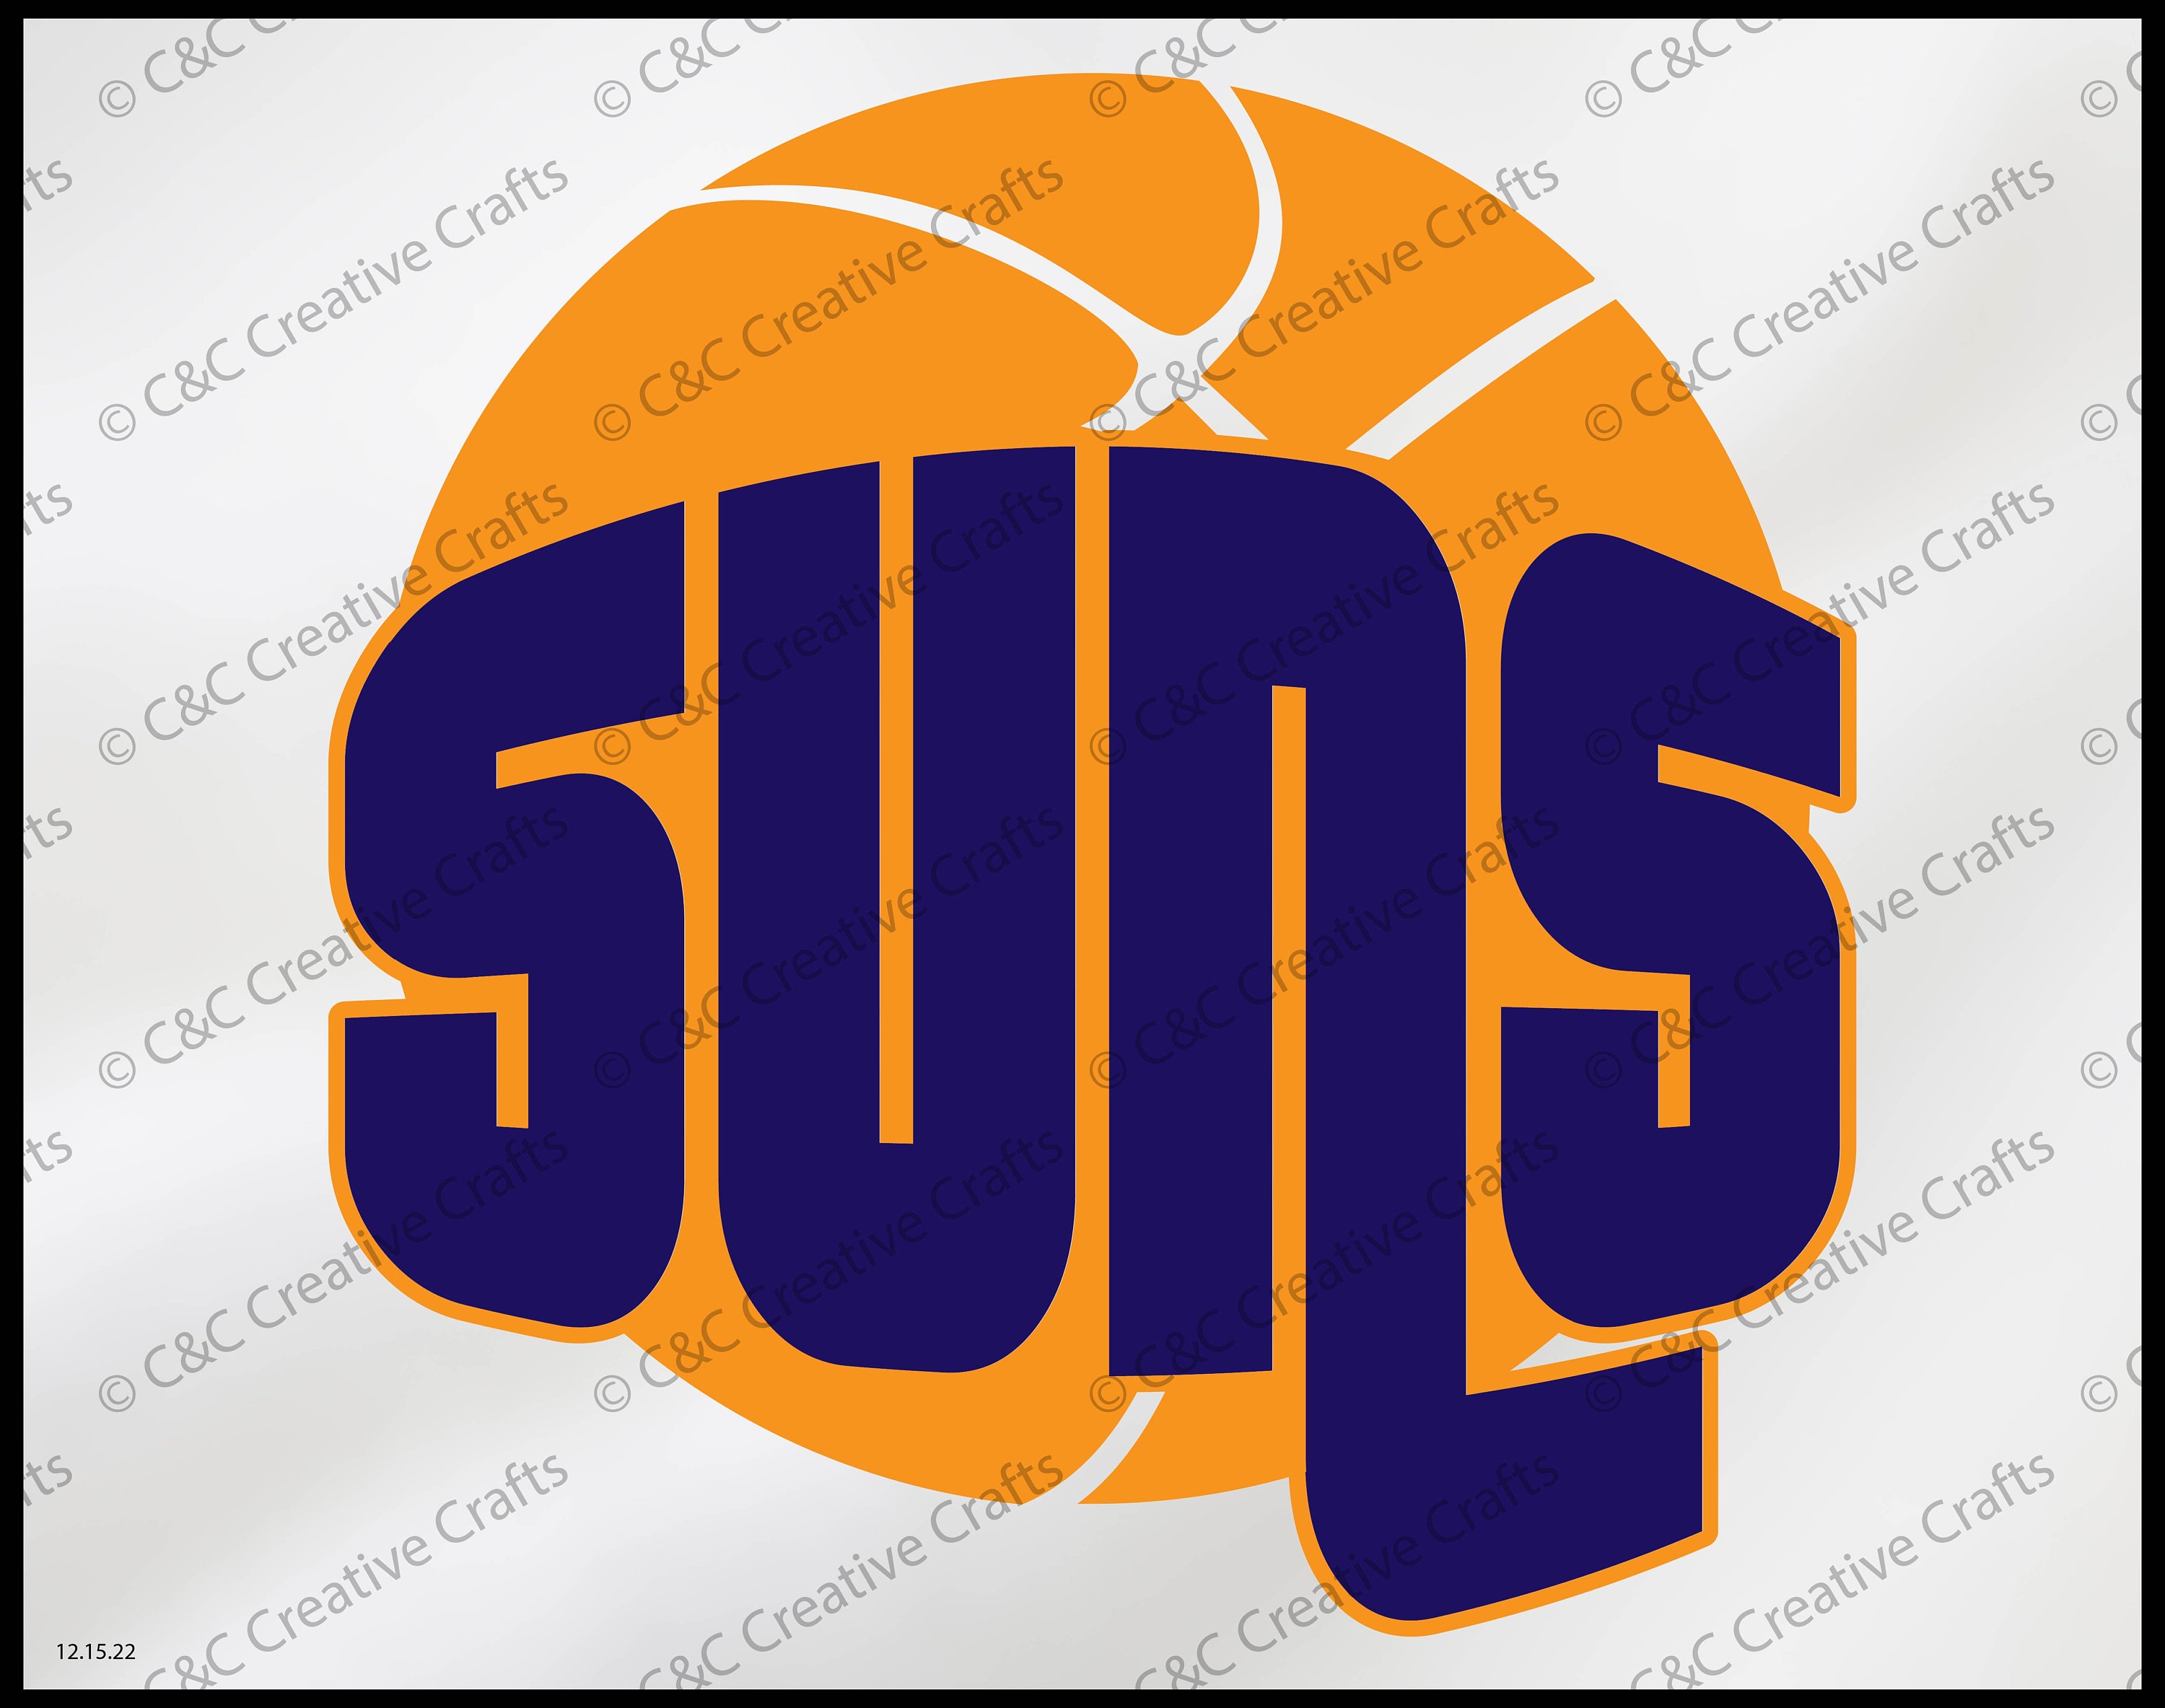 AmendableShirts Suns Shirt - Phoenix Suns Basketball Gift - Do Not Disturb Suns Game in Progress Loading Please Wait - Suns Gift Tee